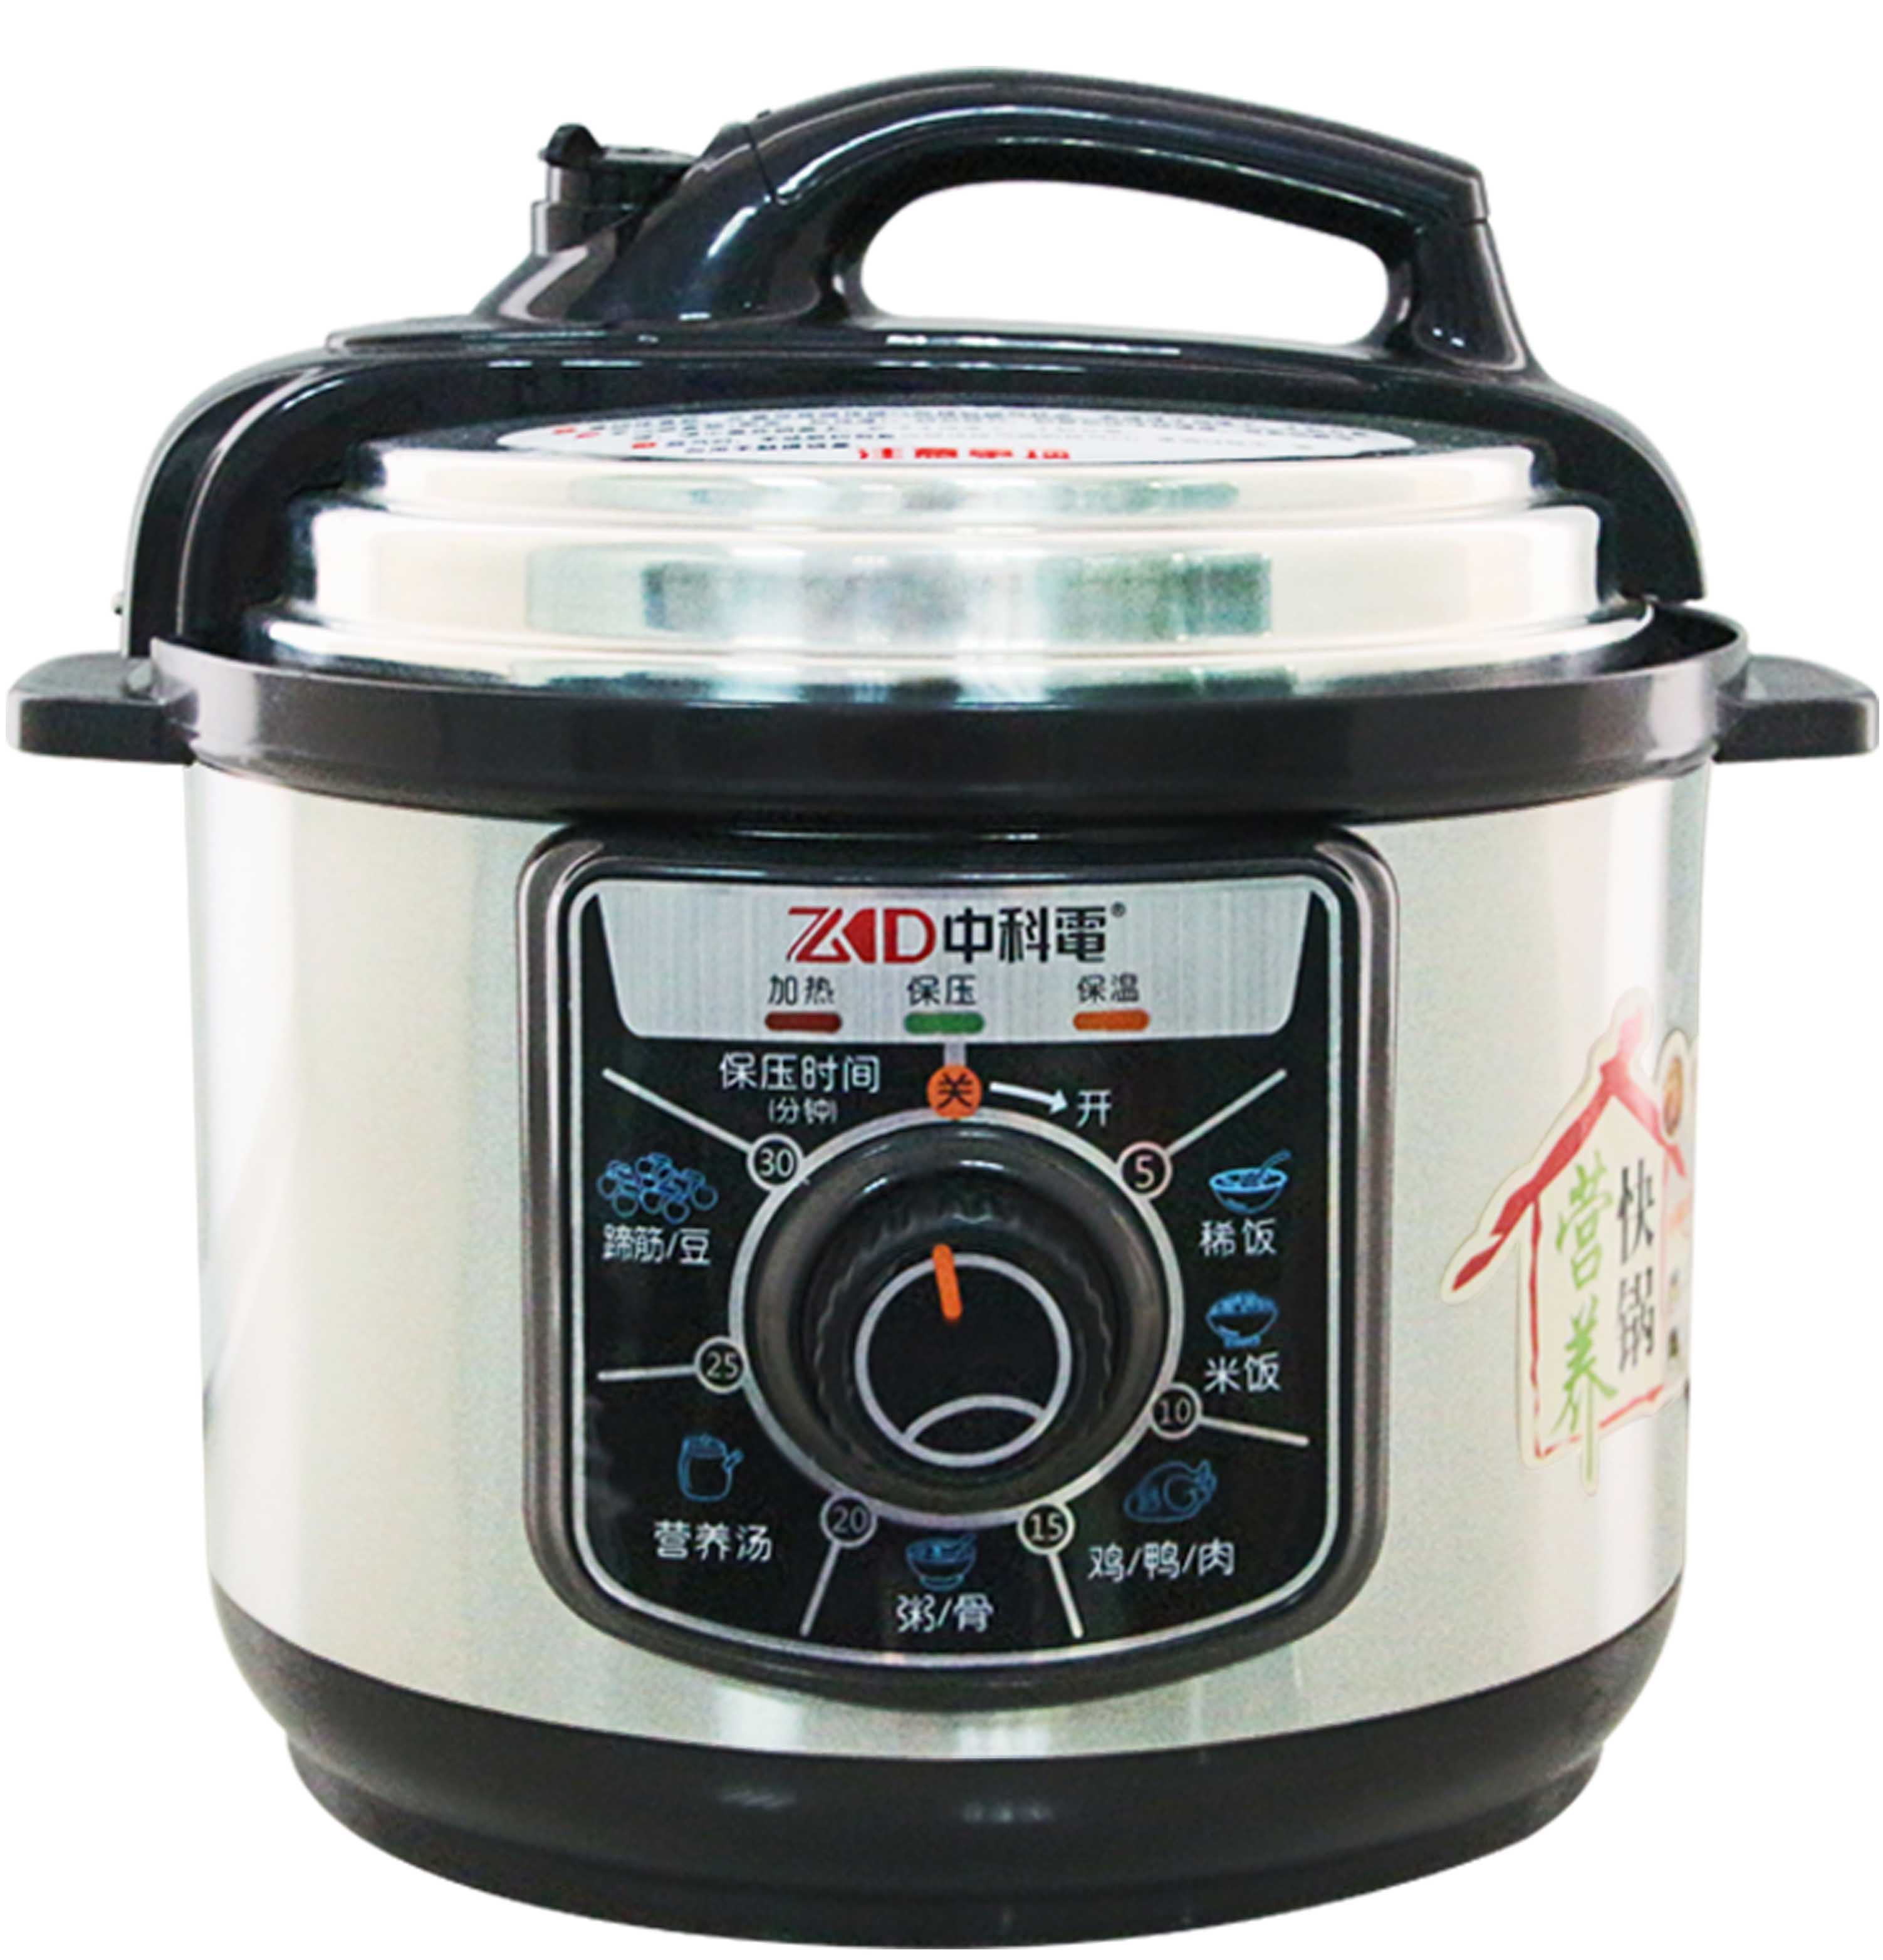 ZKD YINGYUNSTARA Mechanics Pressure Cooker 4L Capacity